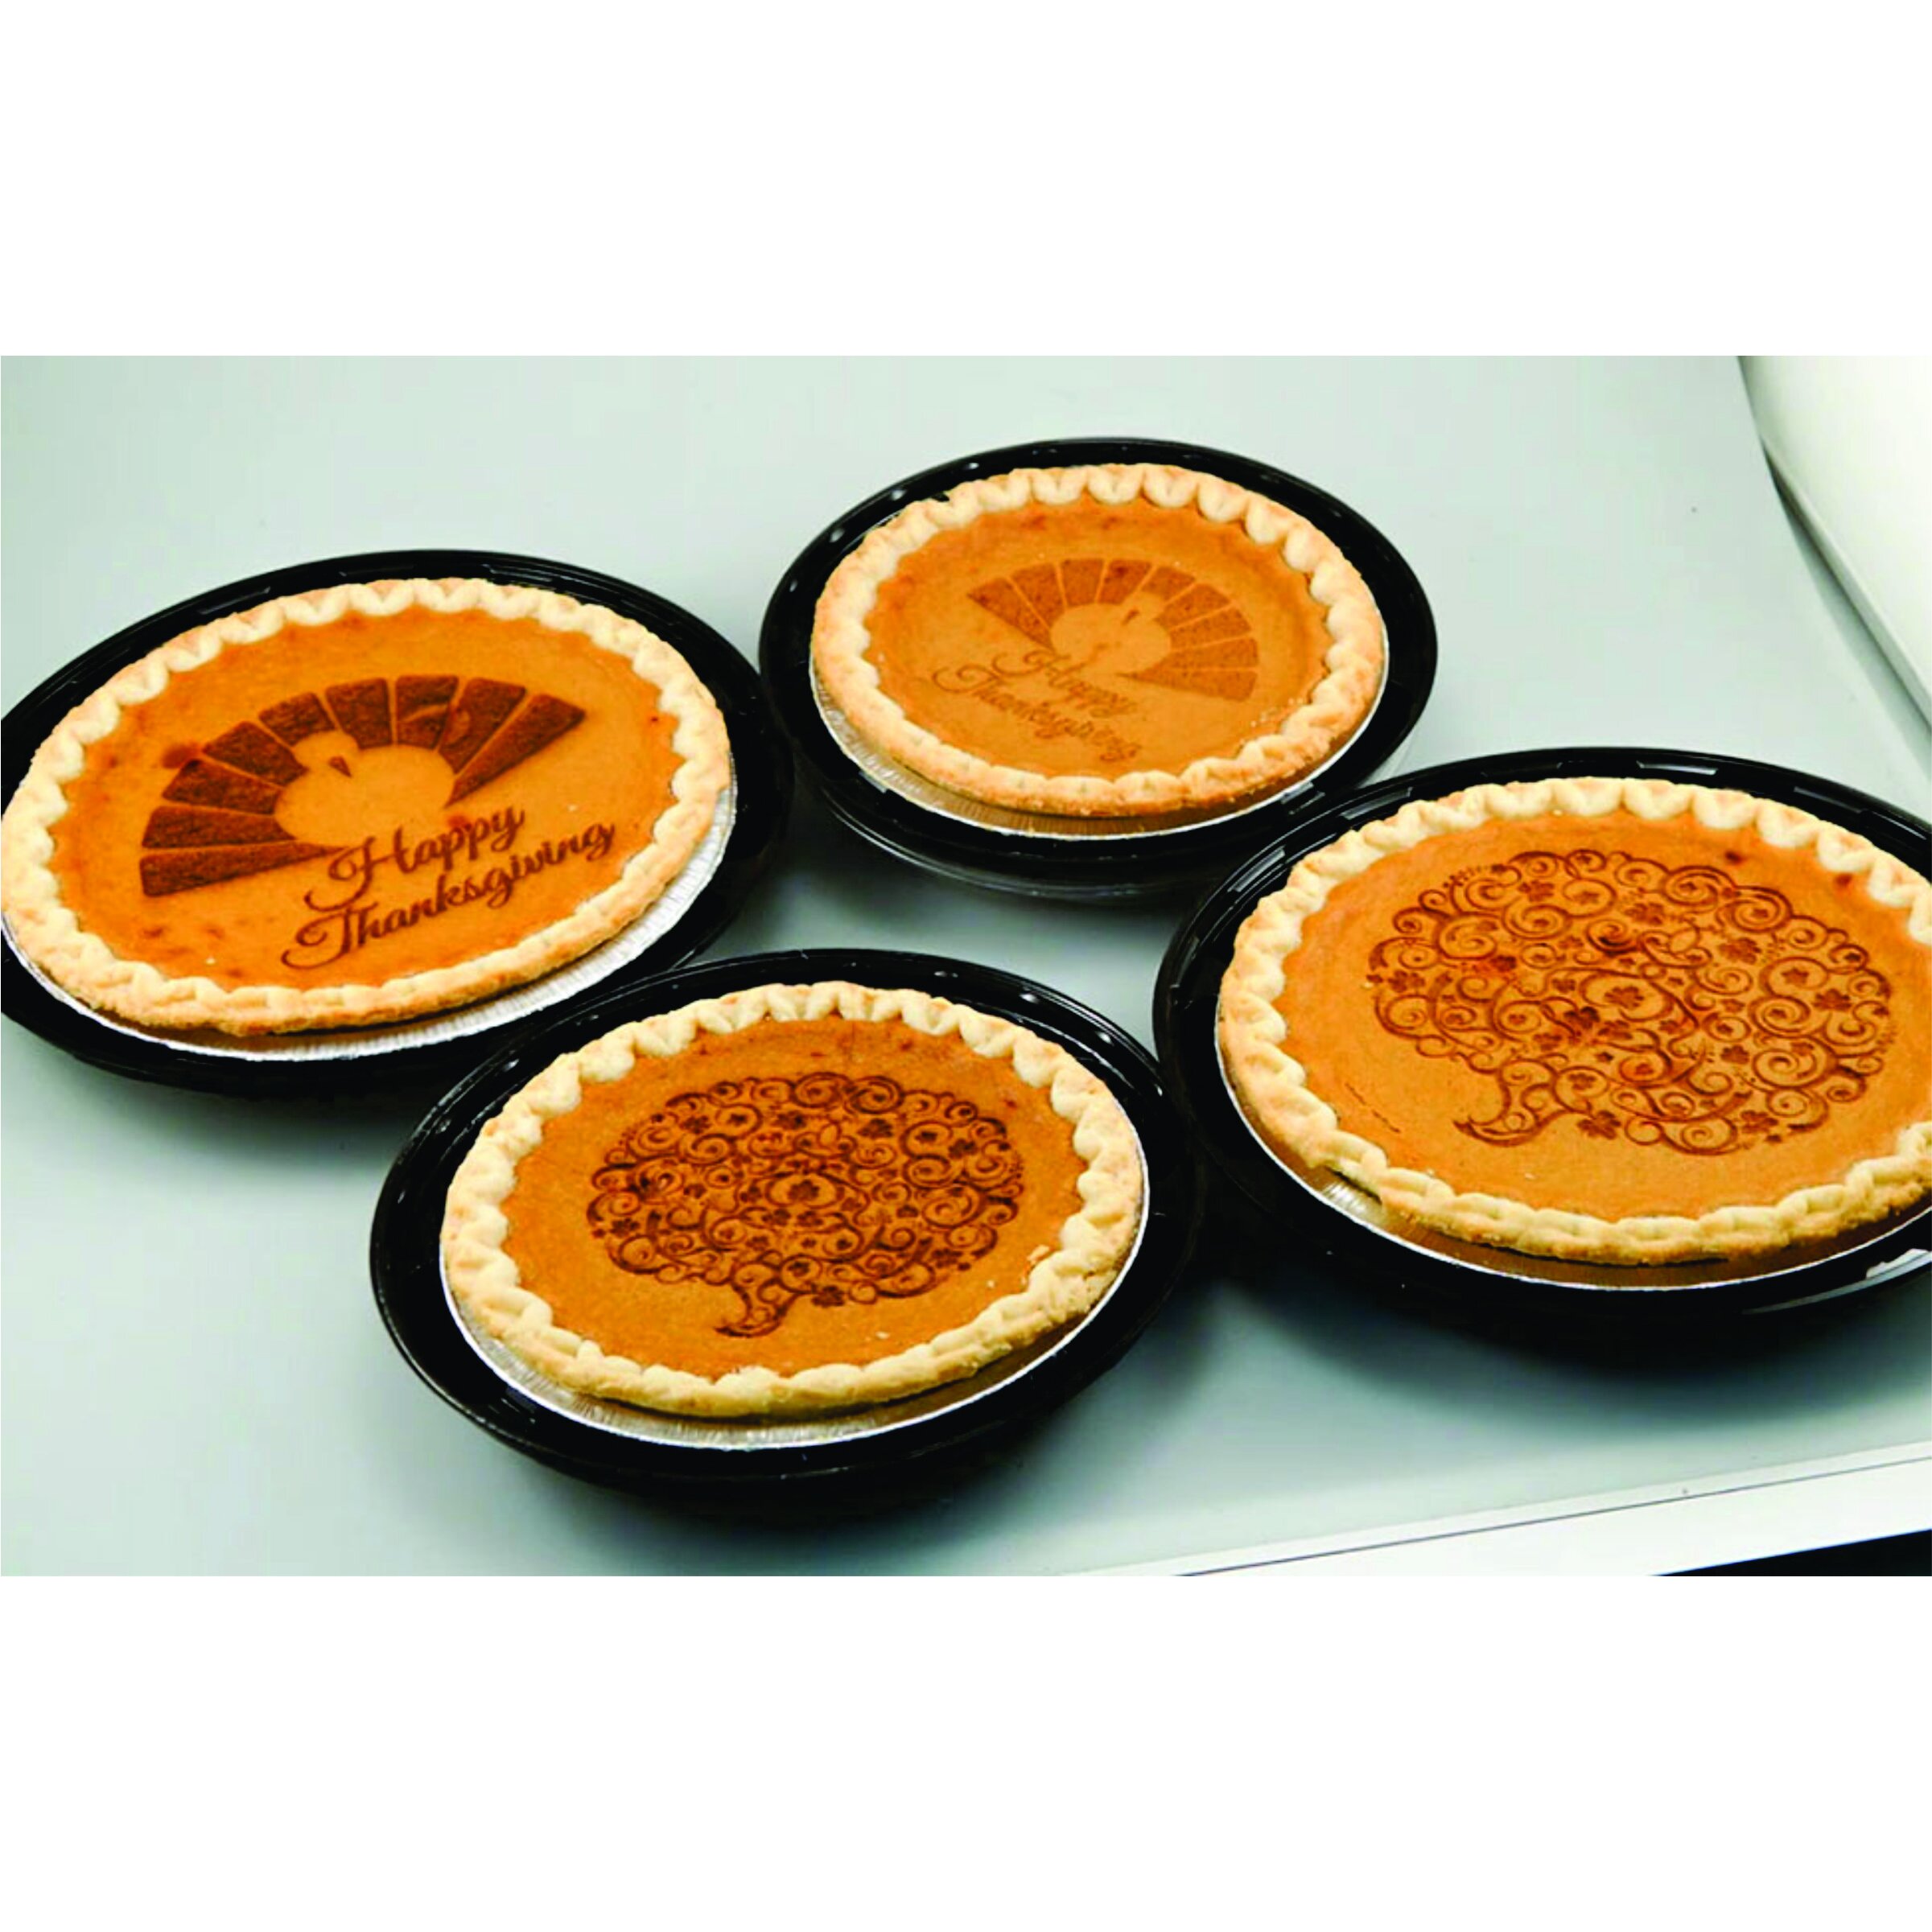 food-laser-engraved-thanksgiving-pies.jpg